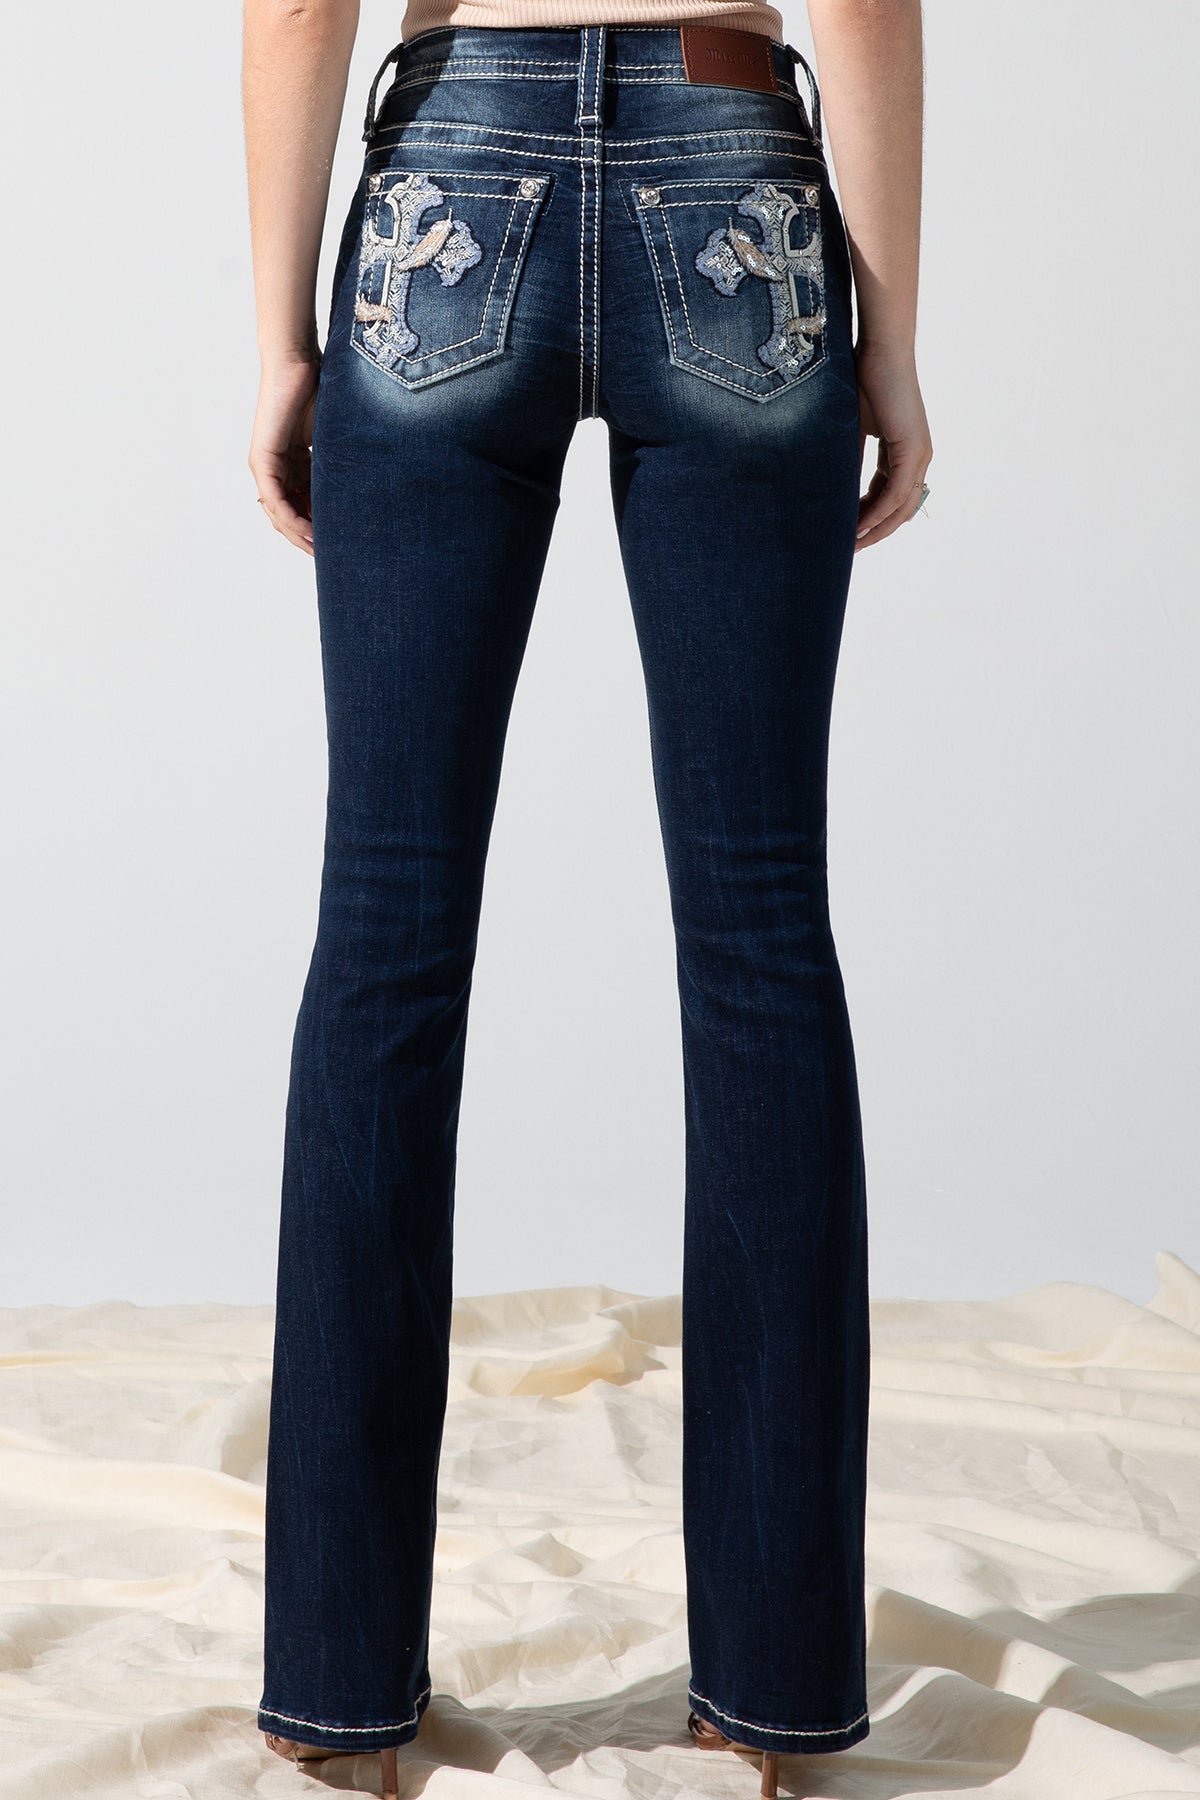 Miss me bling capris jeans  Clothes design, Fashion, Shopping